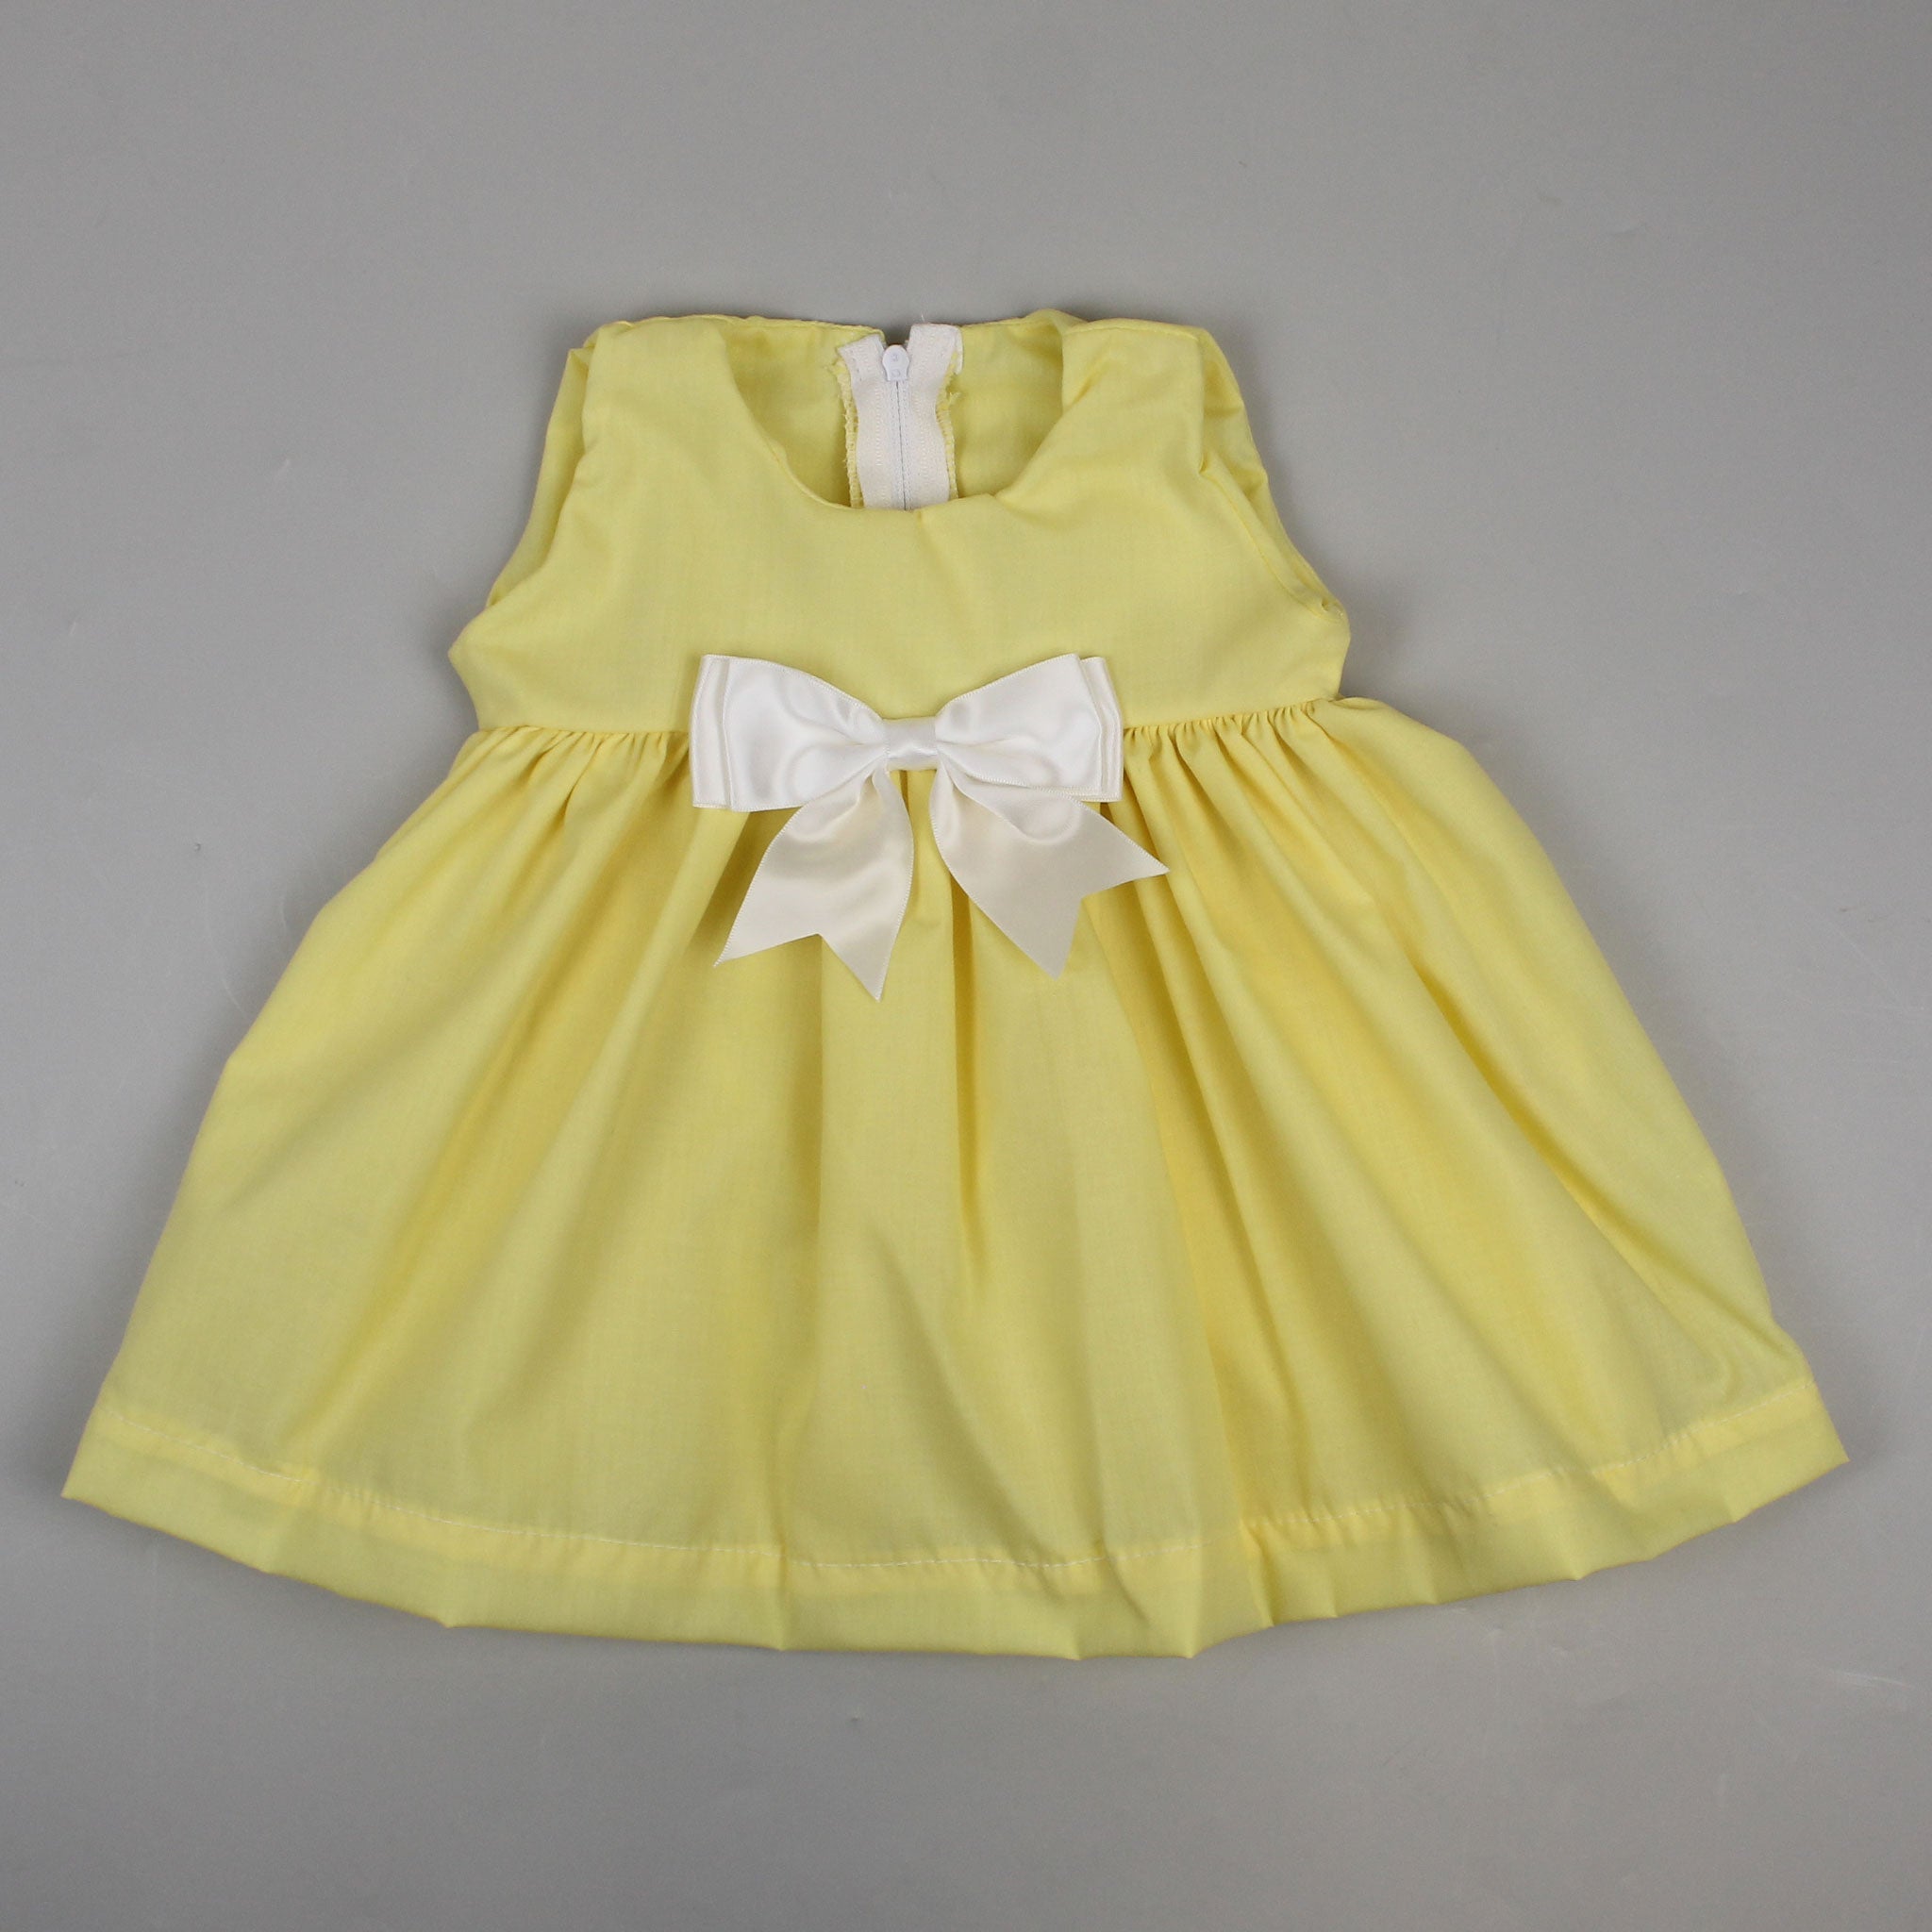 lemon yellow dress with bow